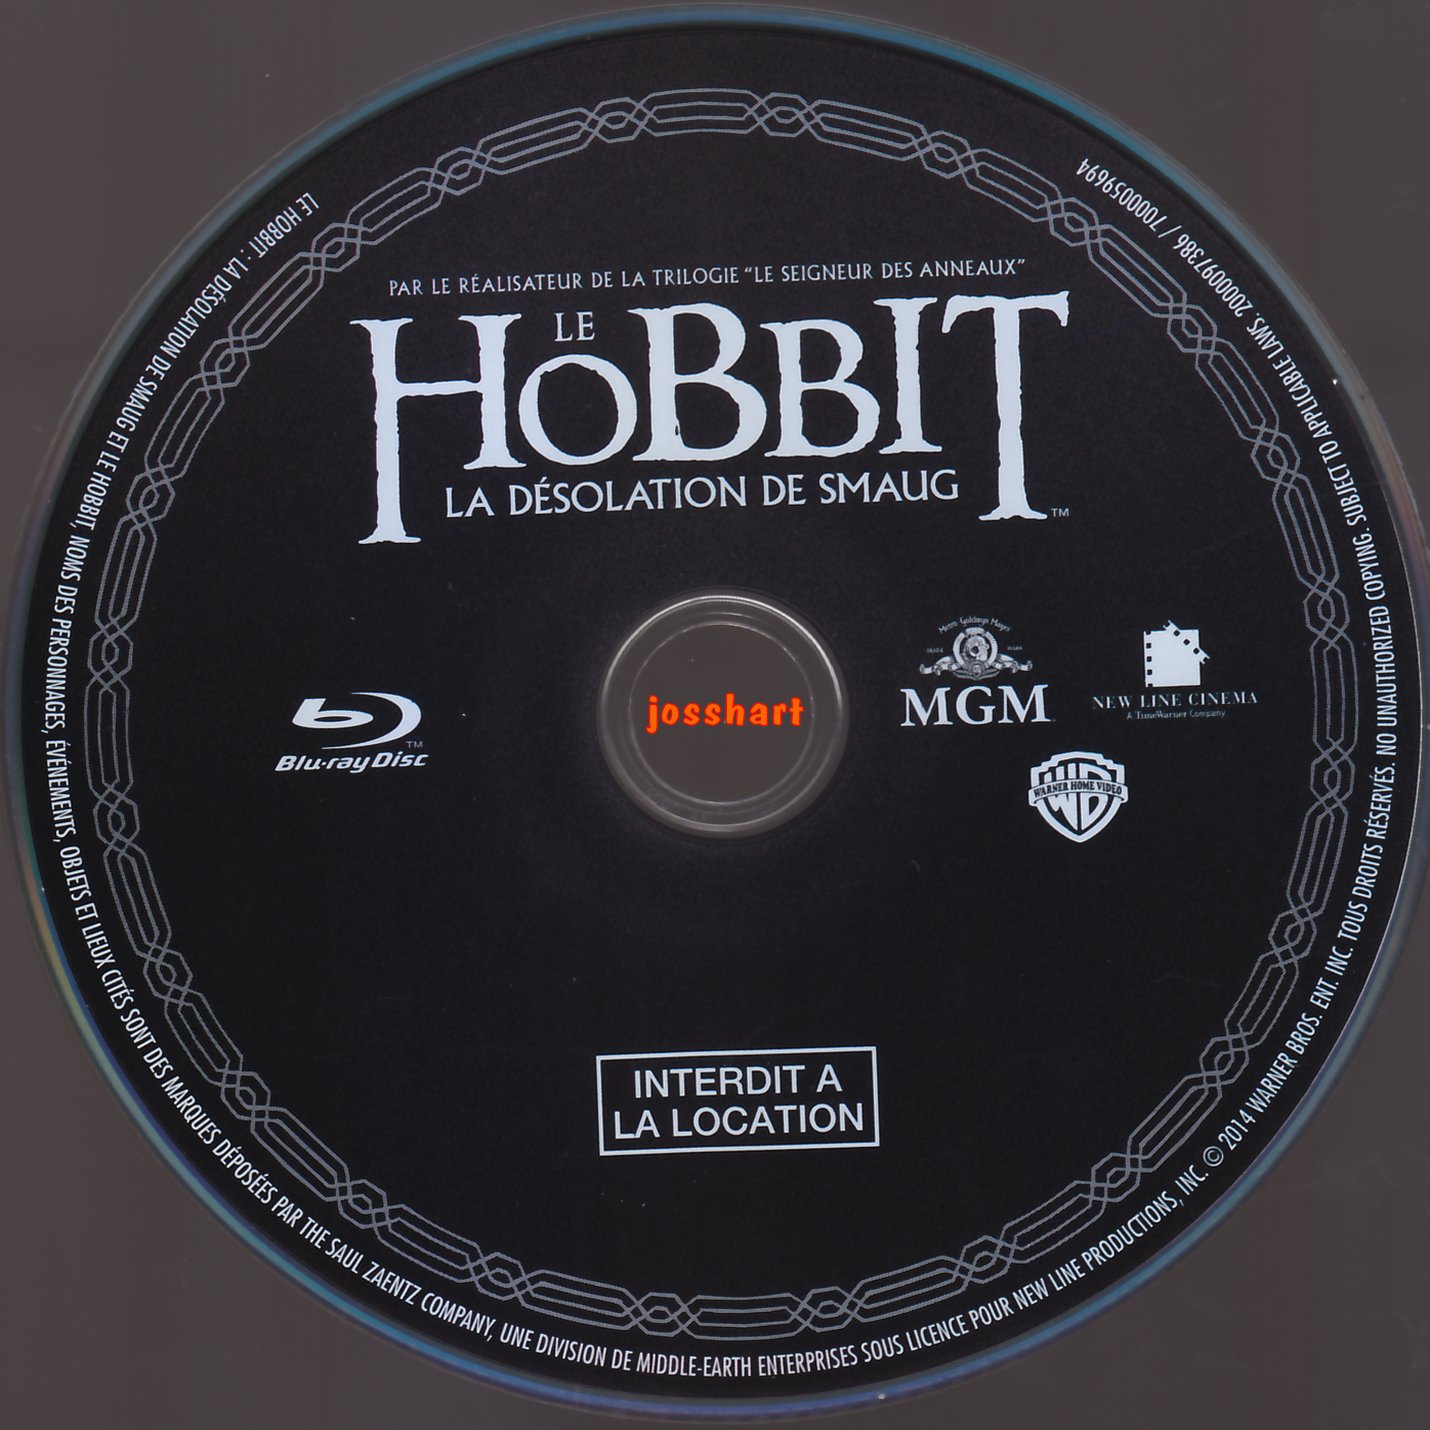 Le Hobbit la Dsolation de Smaug (BLU-RAY)